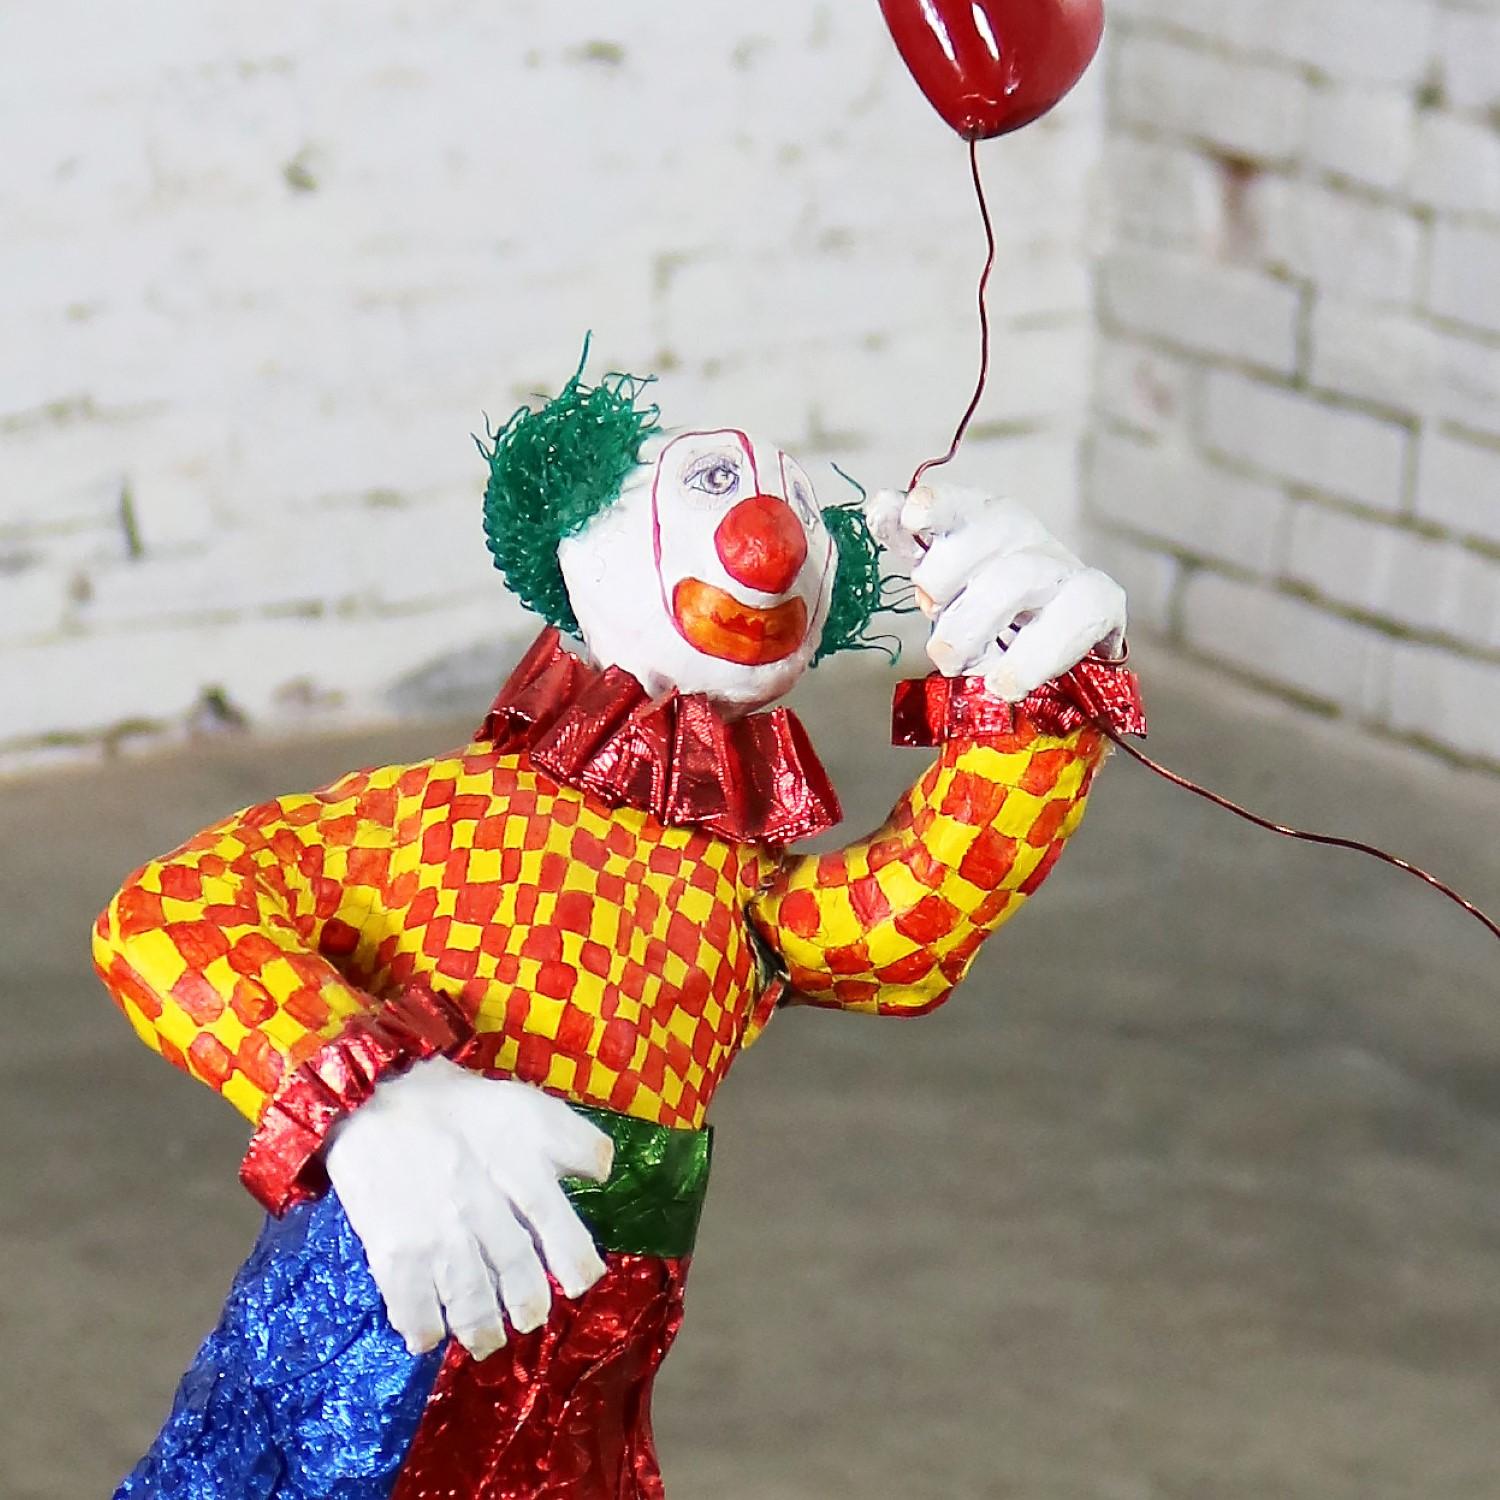 Fun Bright Mixed-Media Folk Art Clown Skulptur mit Ballon Papier Maché (Volkskunst)